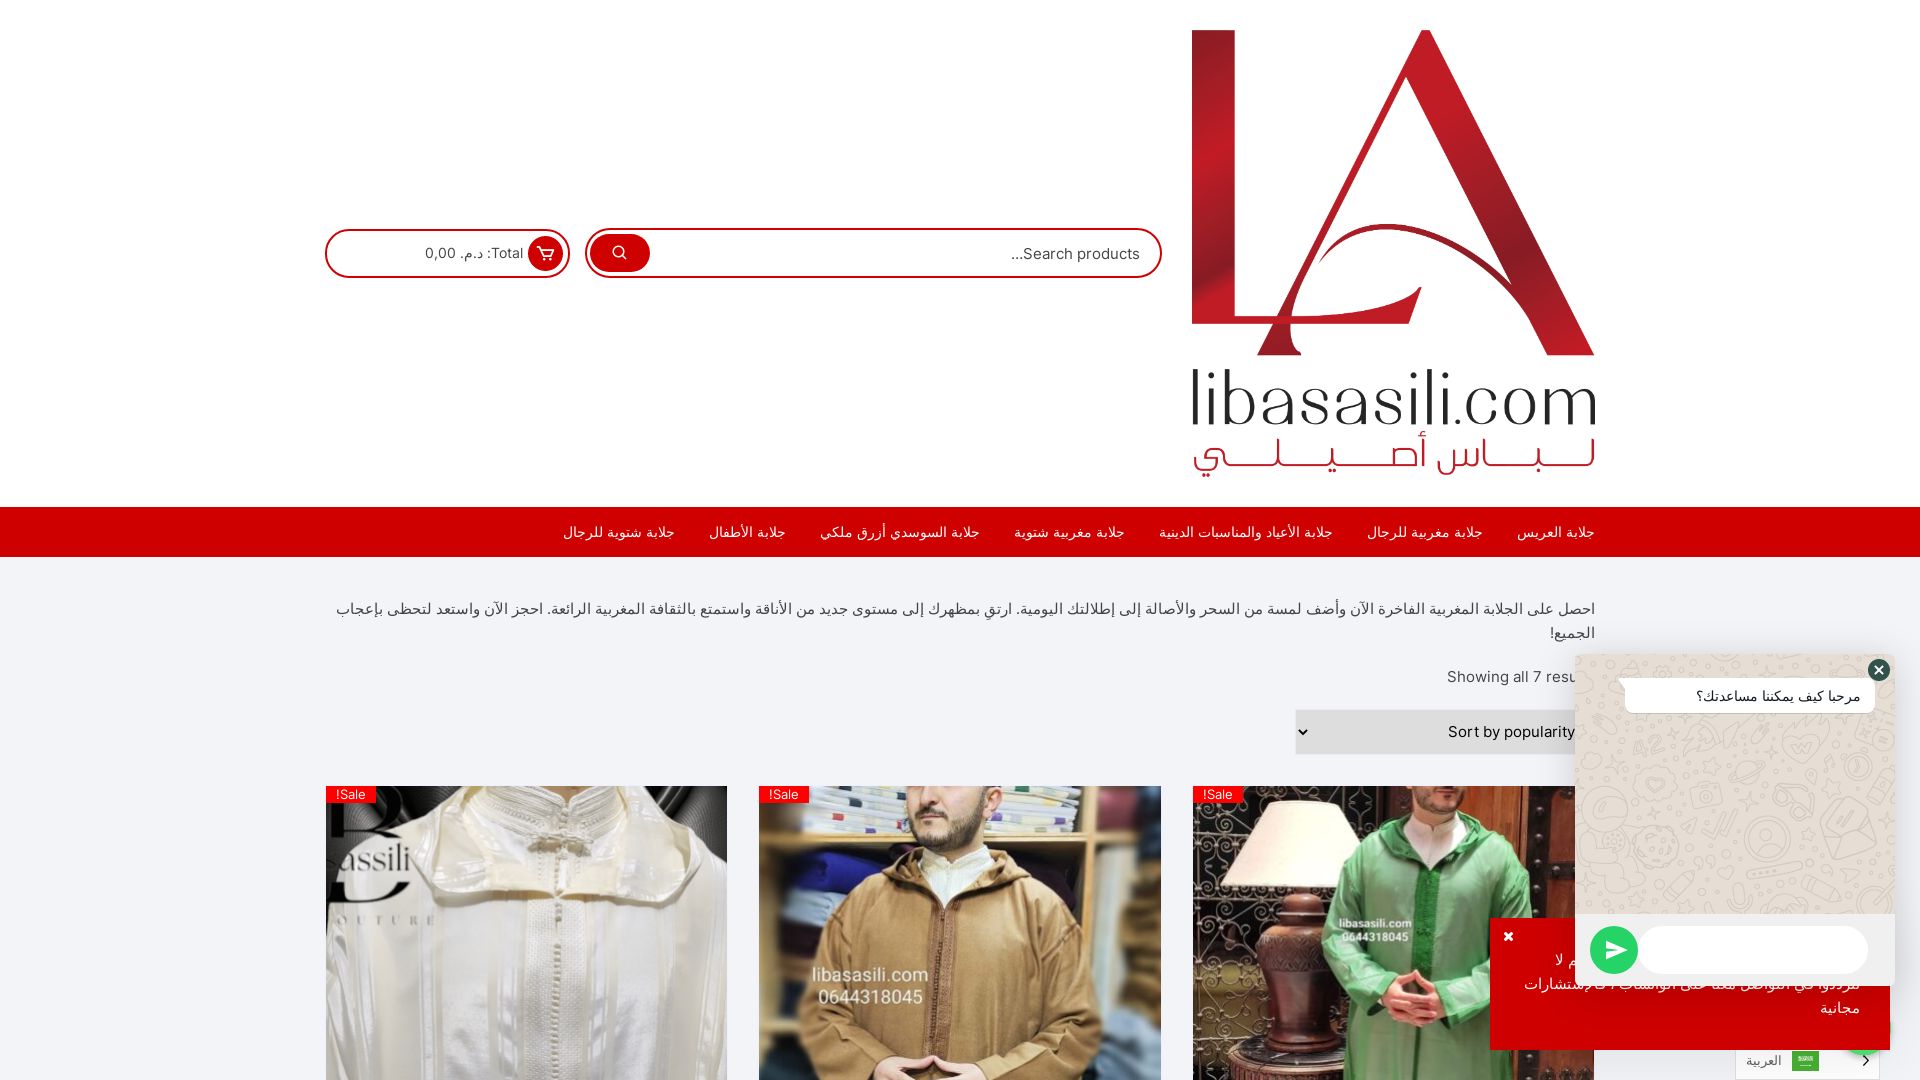 Website status libasasili.com is   ONLINE